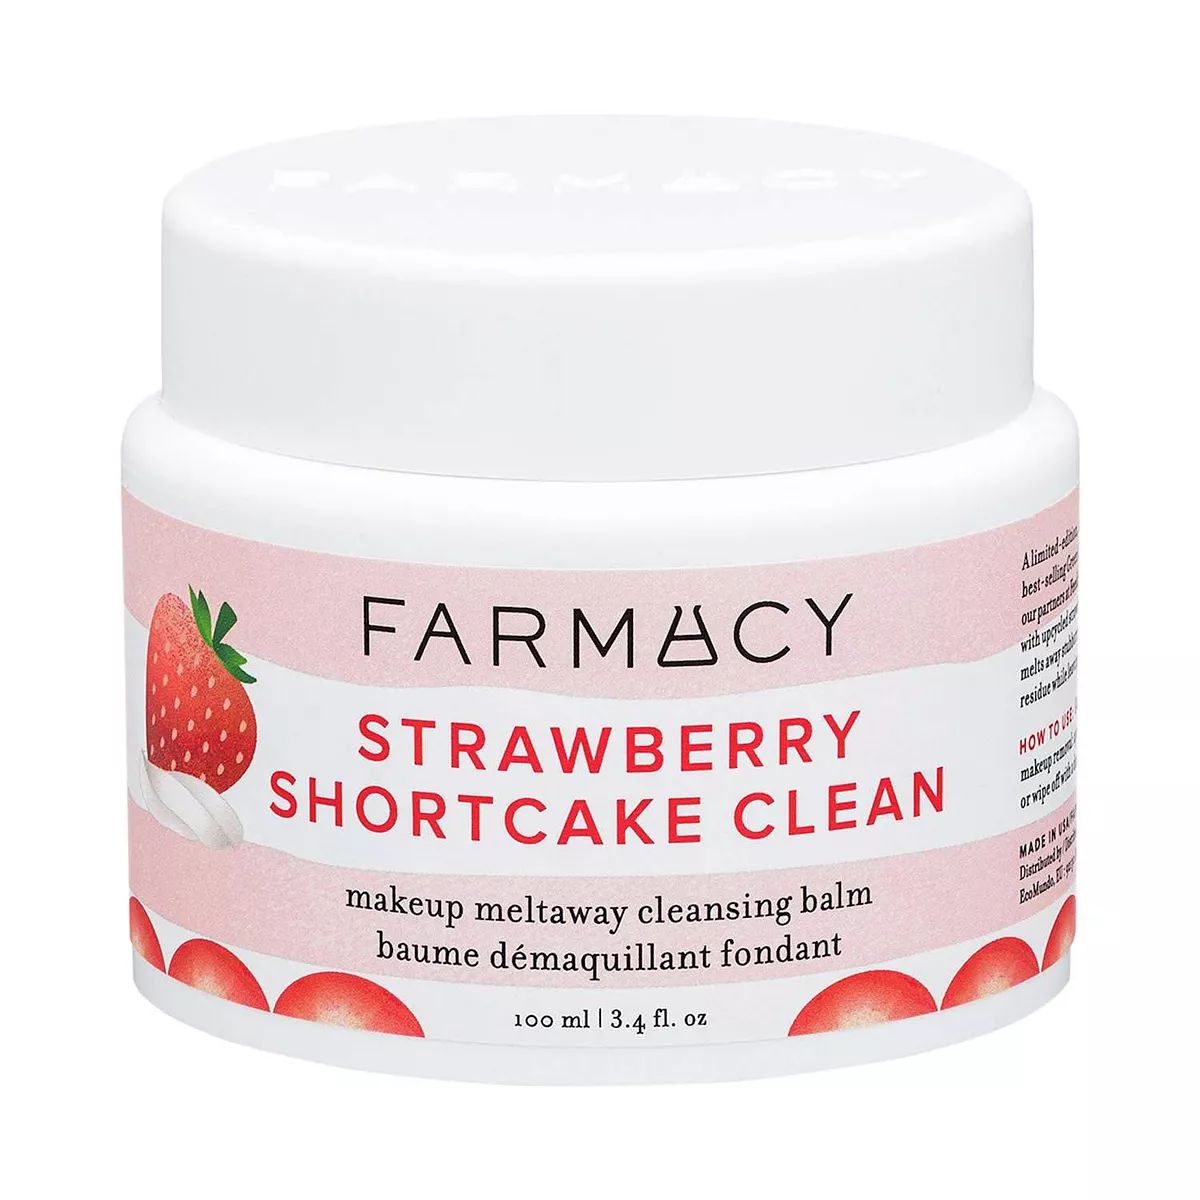 Farmacy Strawberry Shortcake Clean Makeup Meltaway Cleansing Balm | Kohl's